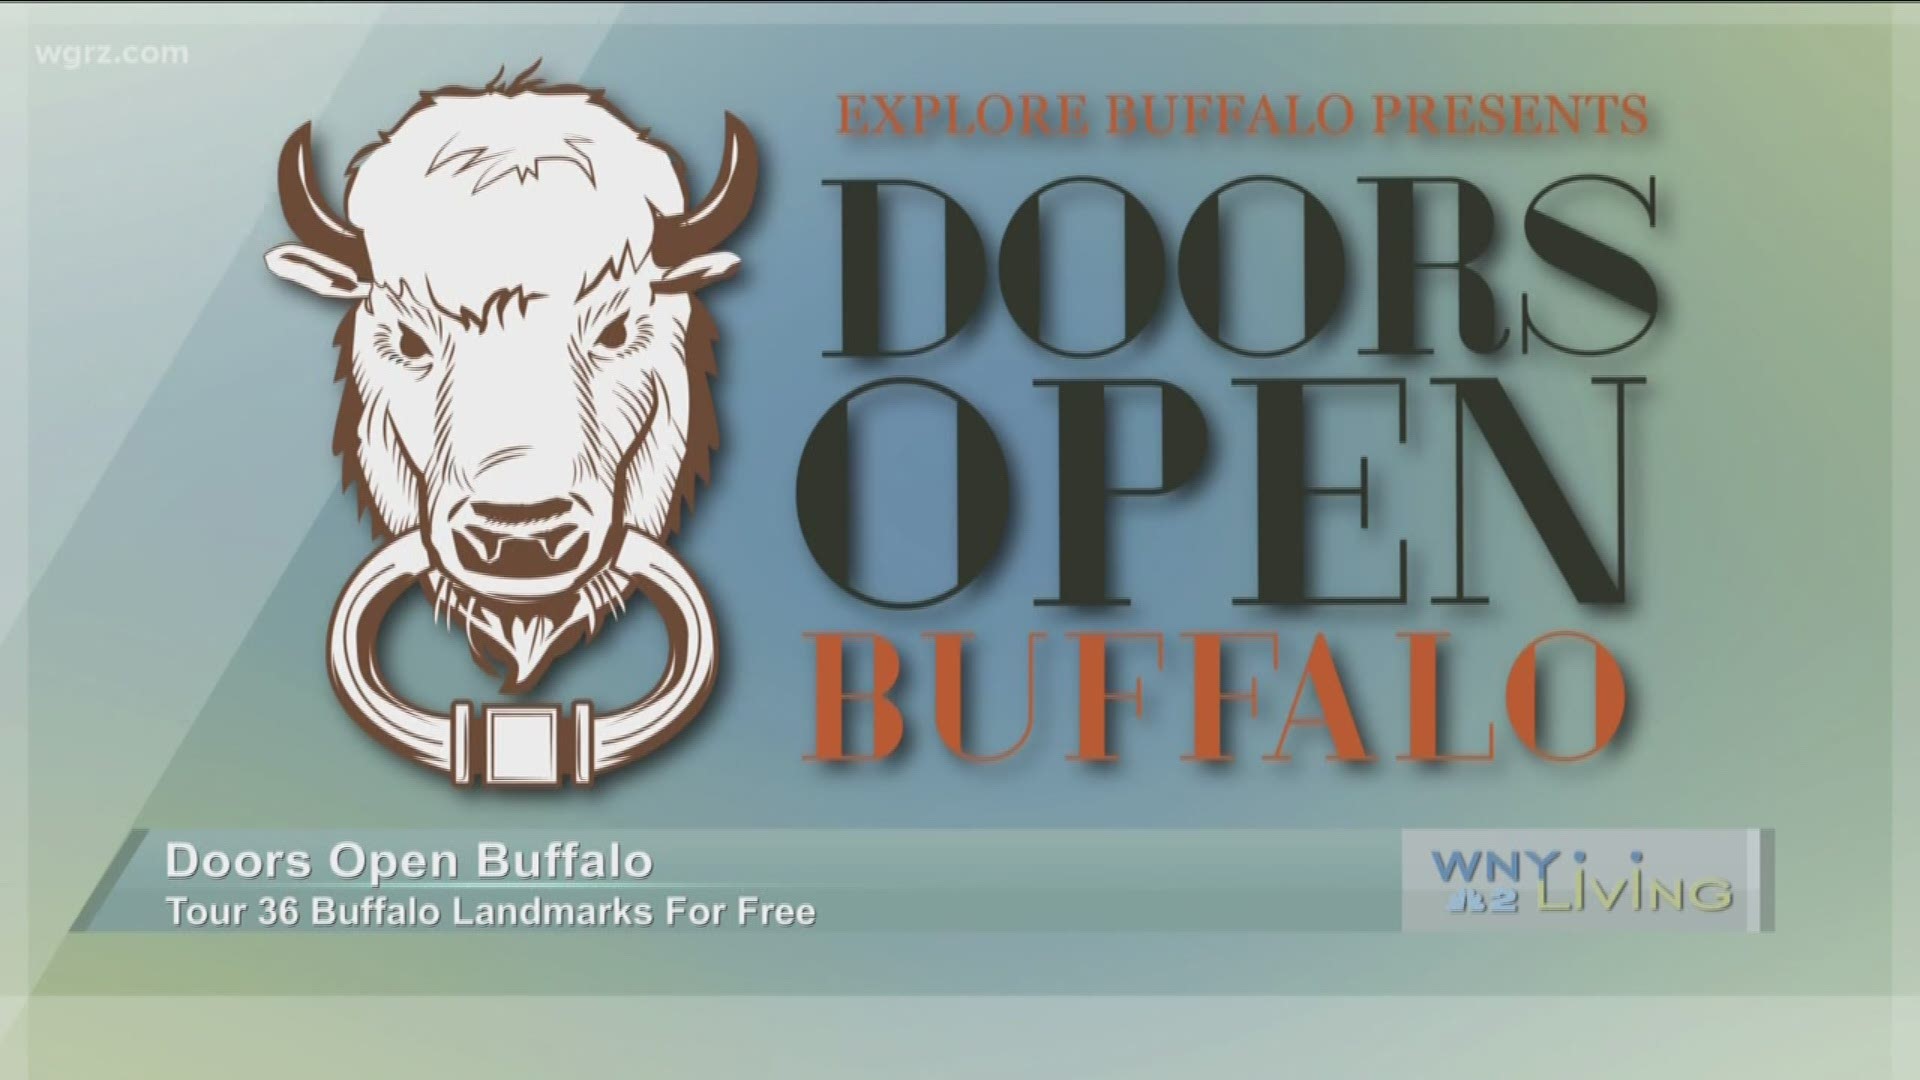 WNY Living - June 15 - Doors Open Buffalo (SPONSORED CONTENT)